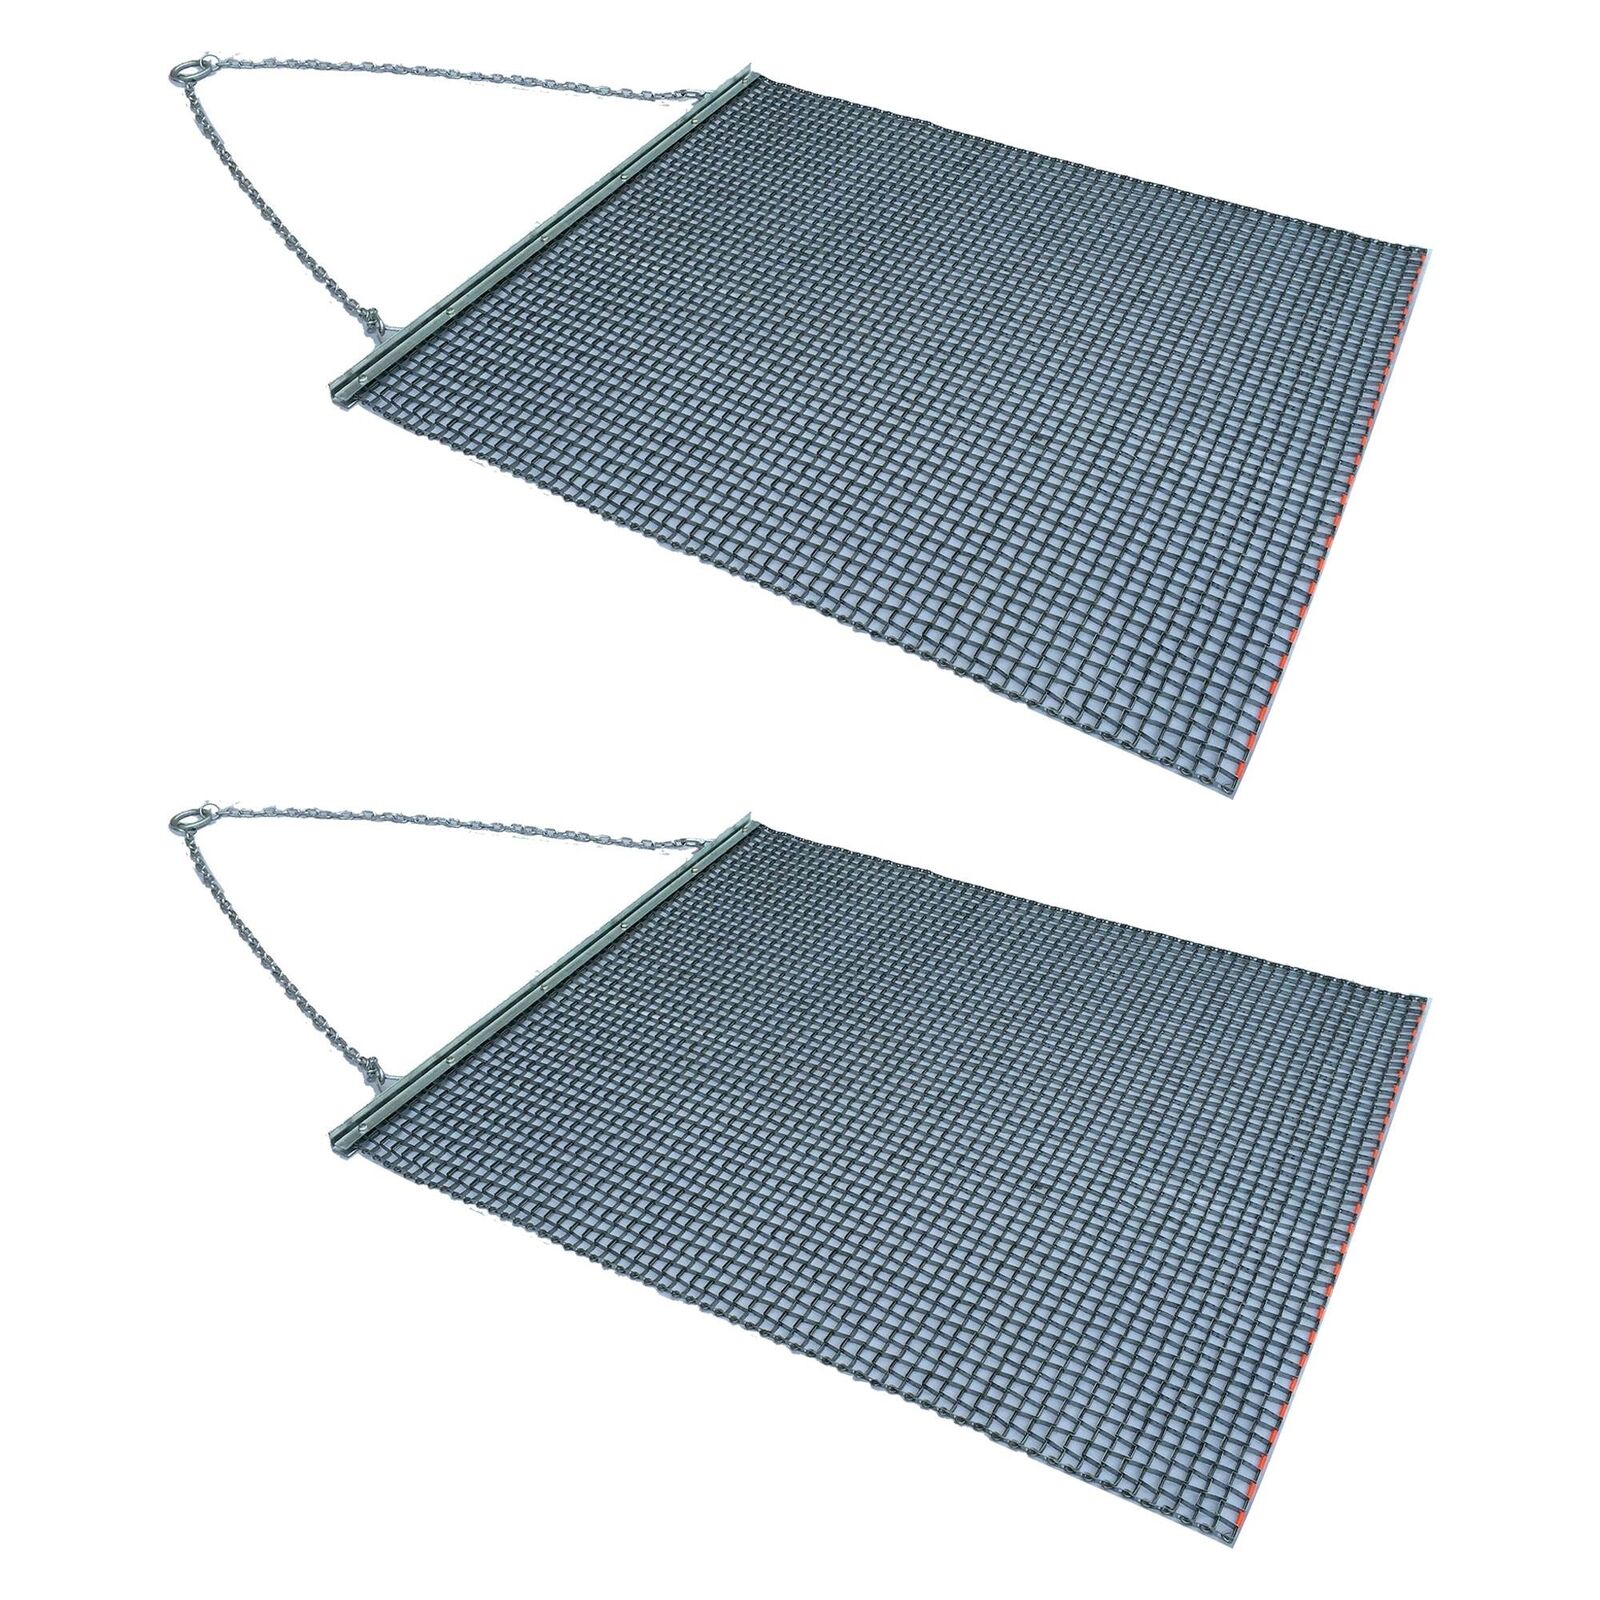 Yard Tuff Atv/utv 6' X 8' Zinc Plated Field Surface Leveling Drag Mat (2 Pack)